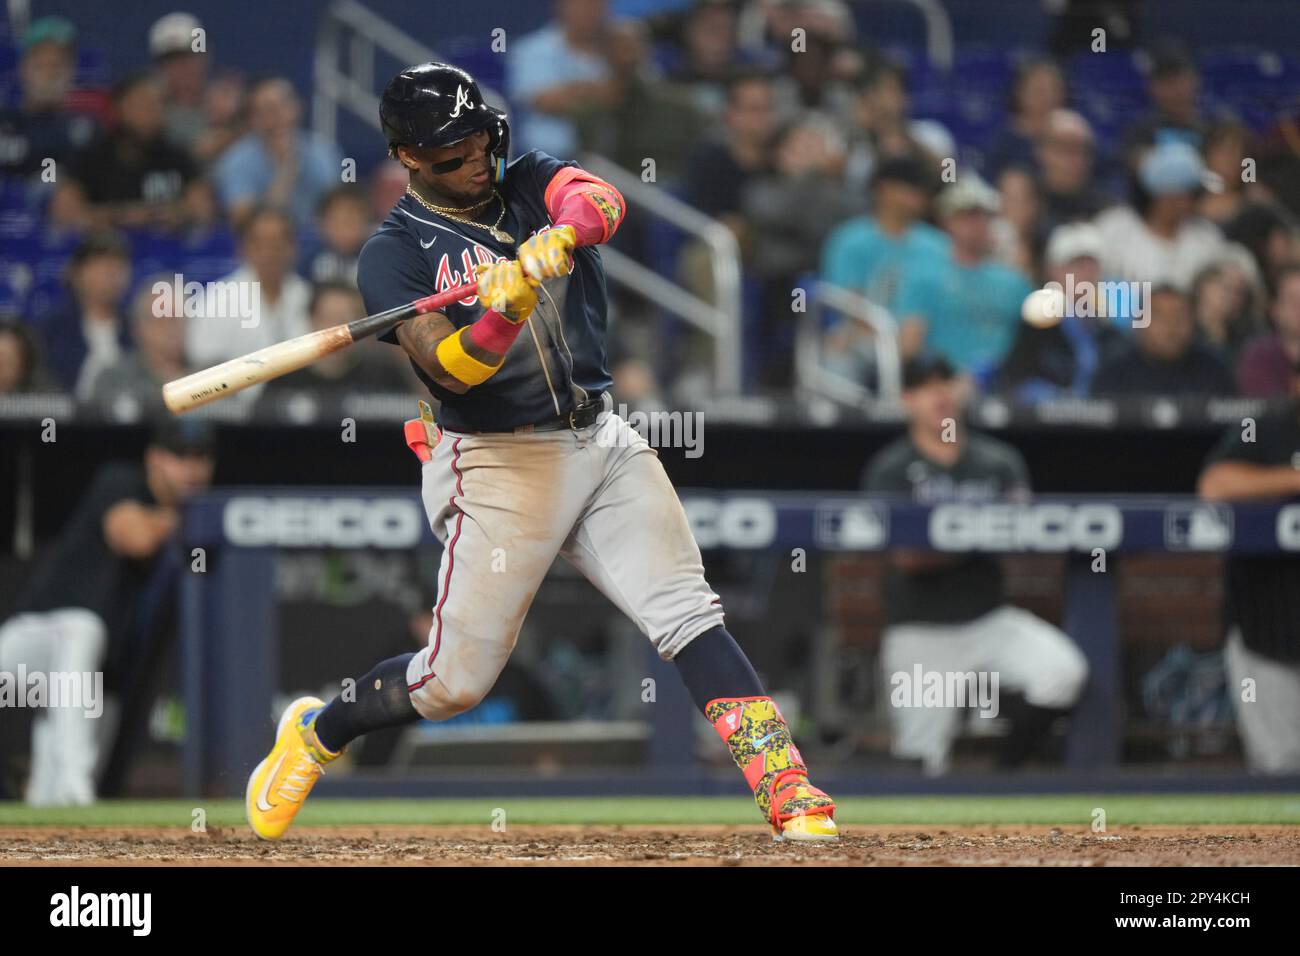 MIAMI, FL - May 2: Atlanta Braves right fielder Ronald Acuna Jr